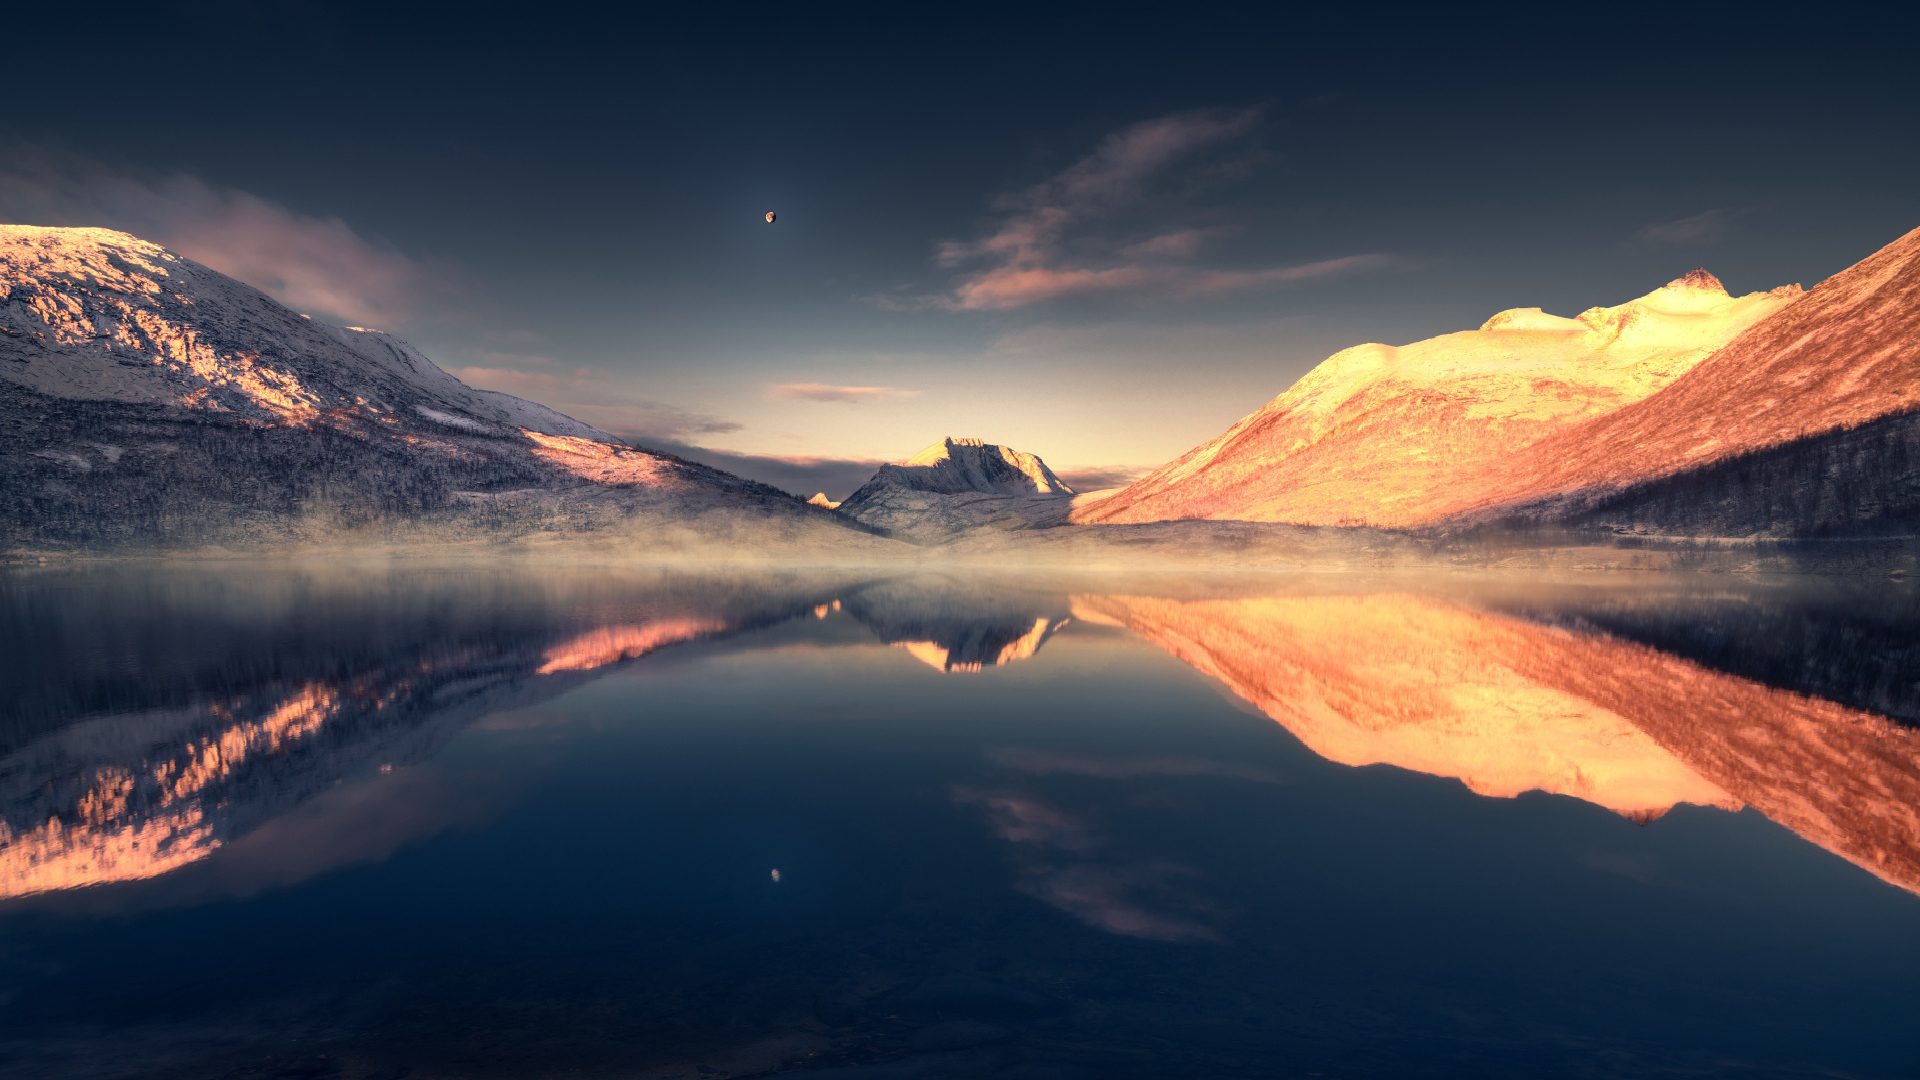 Mountain Lake Reflection Free HQ Image